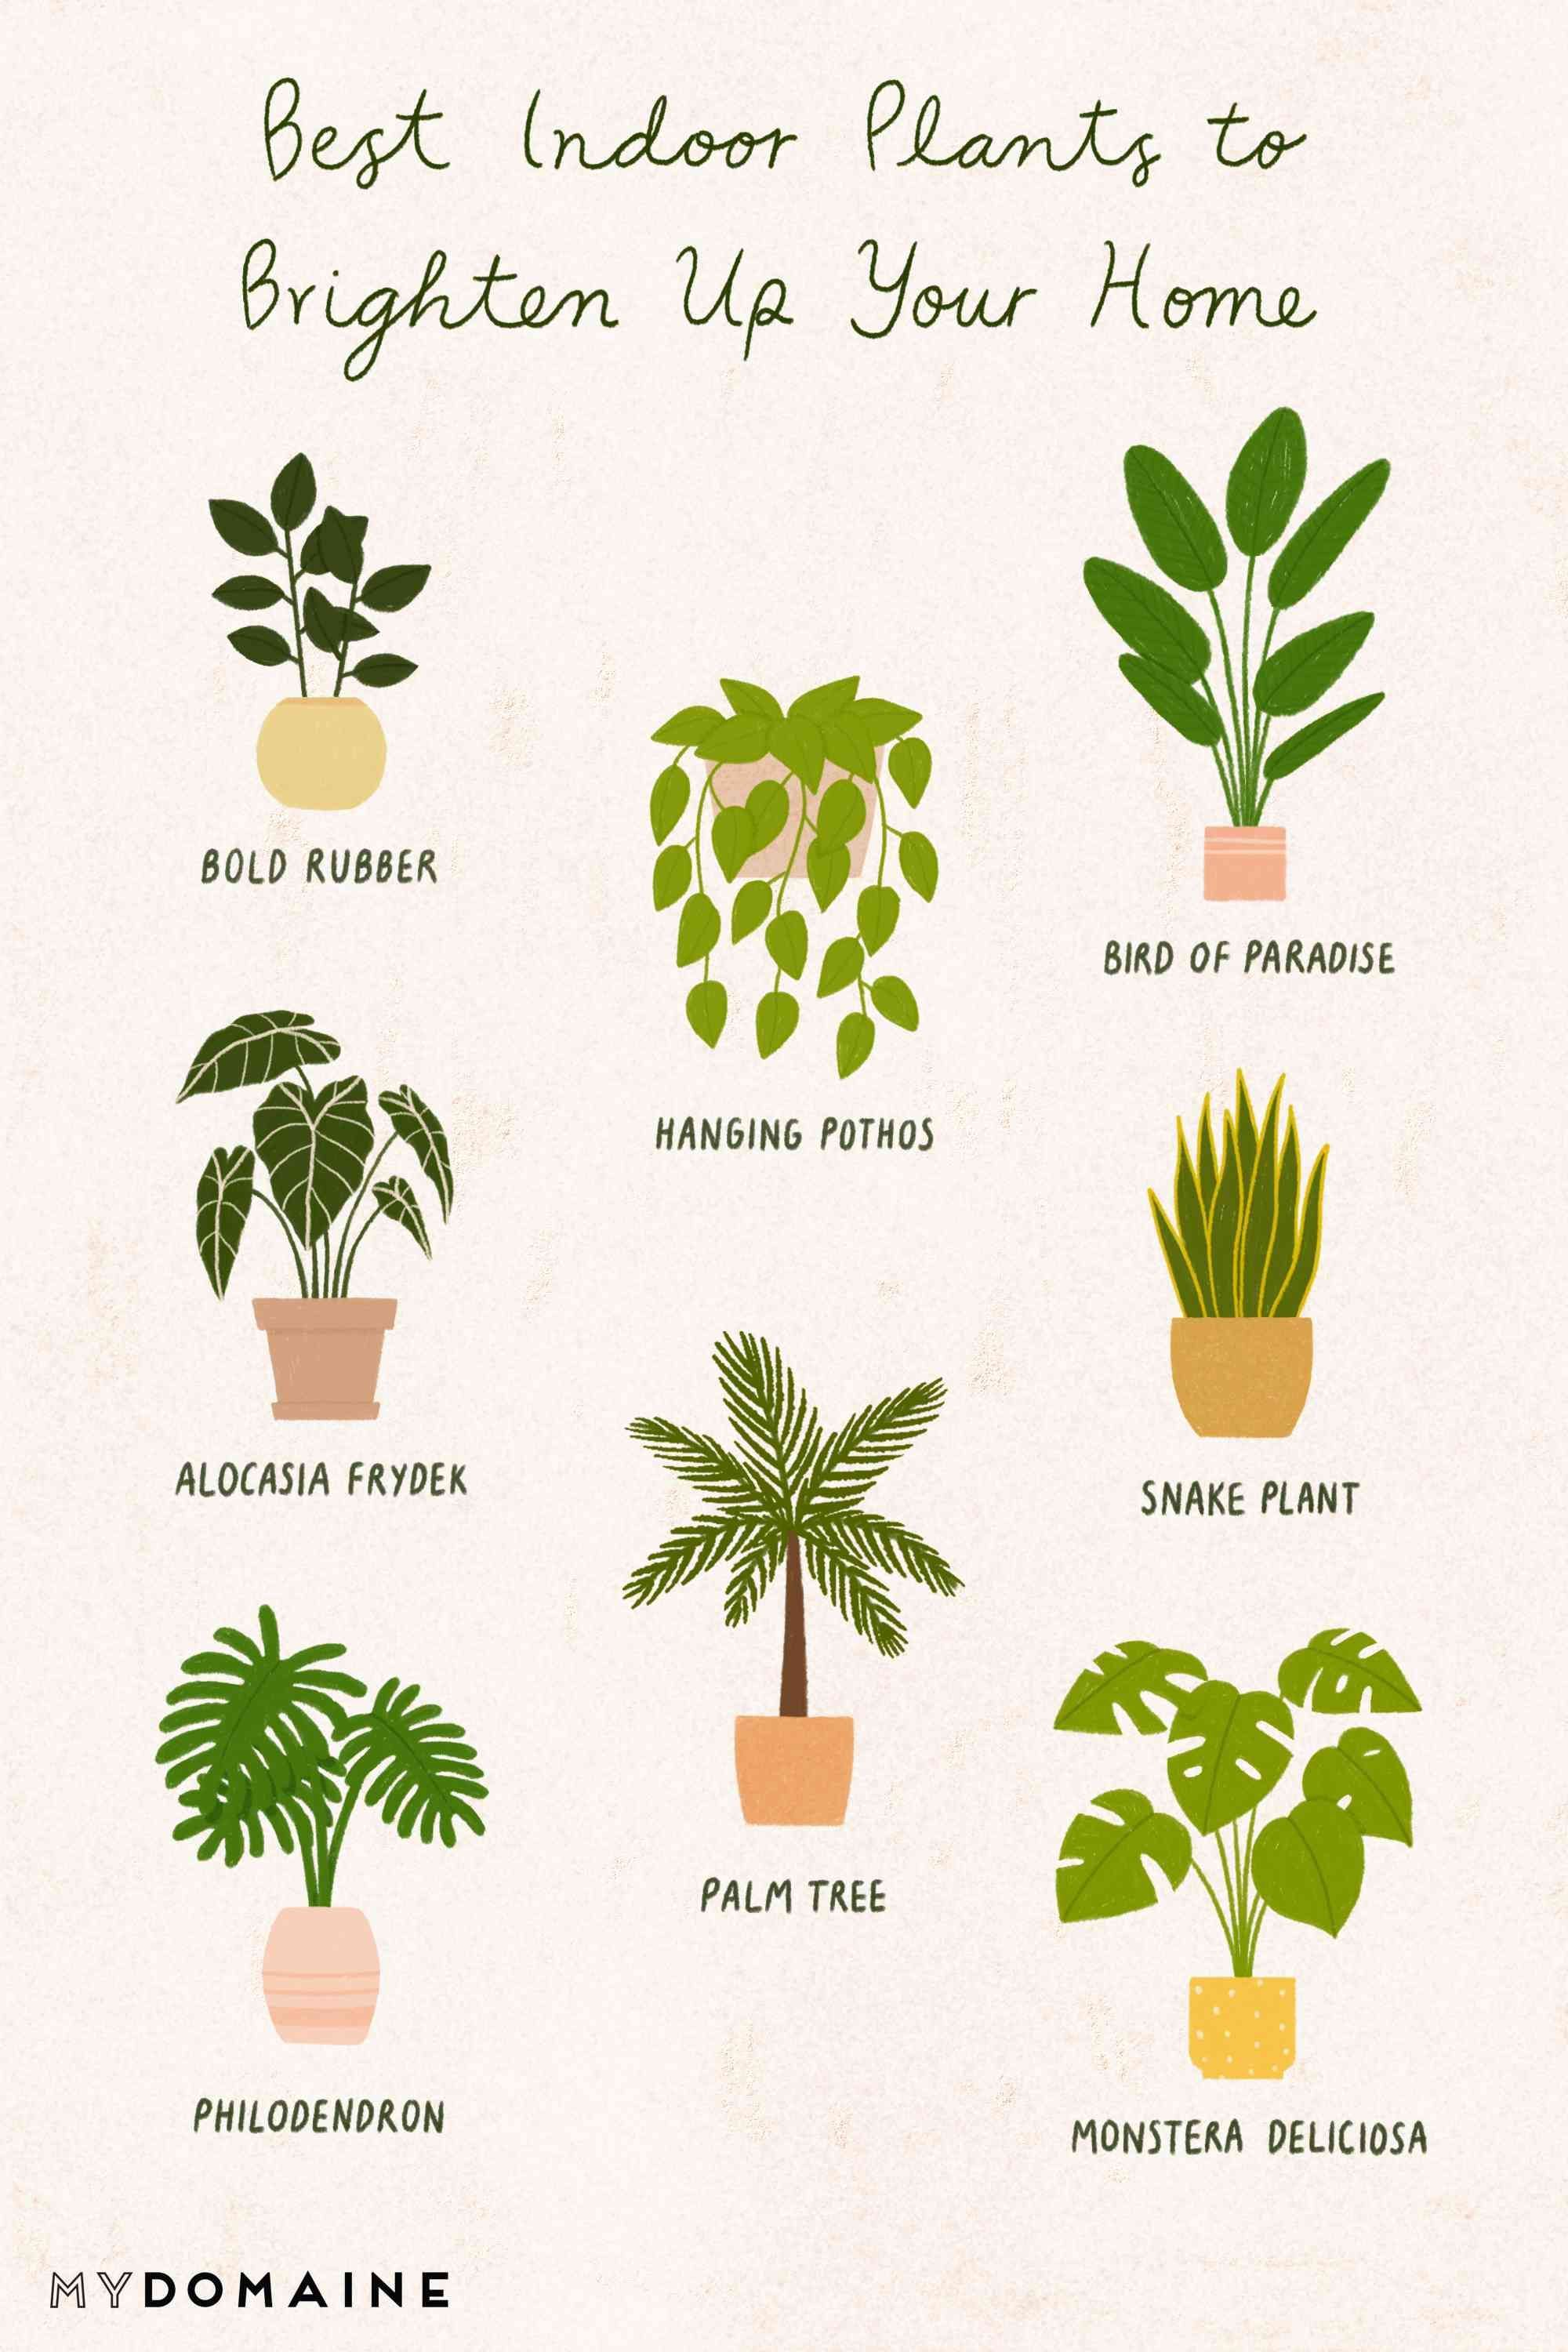 14 plants Potted illustration ideas